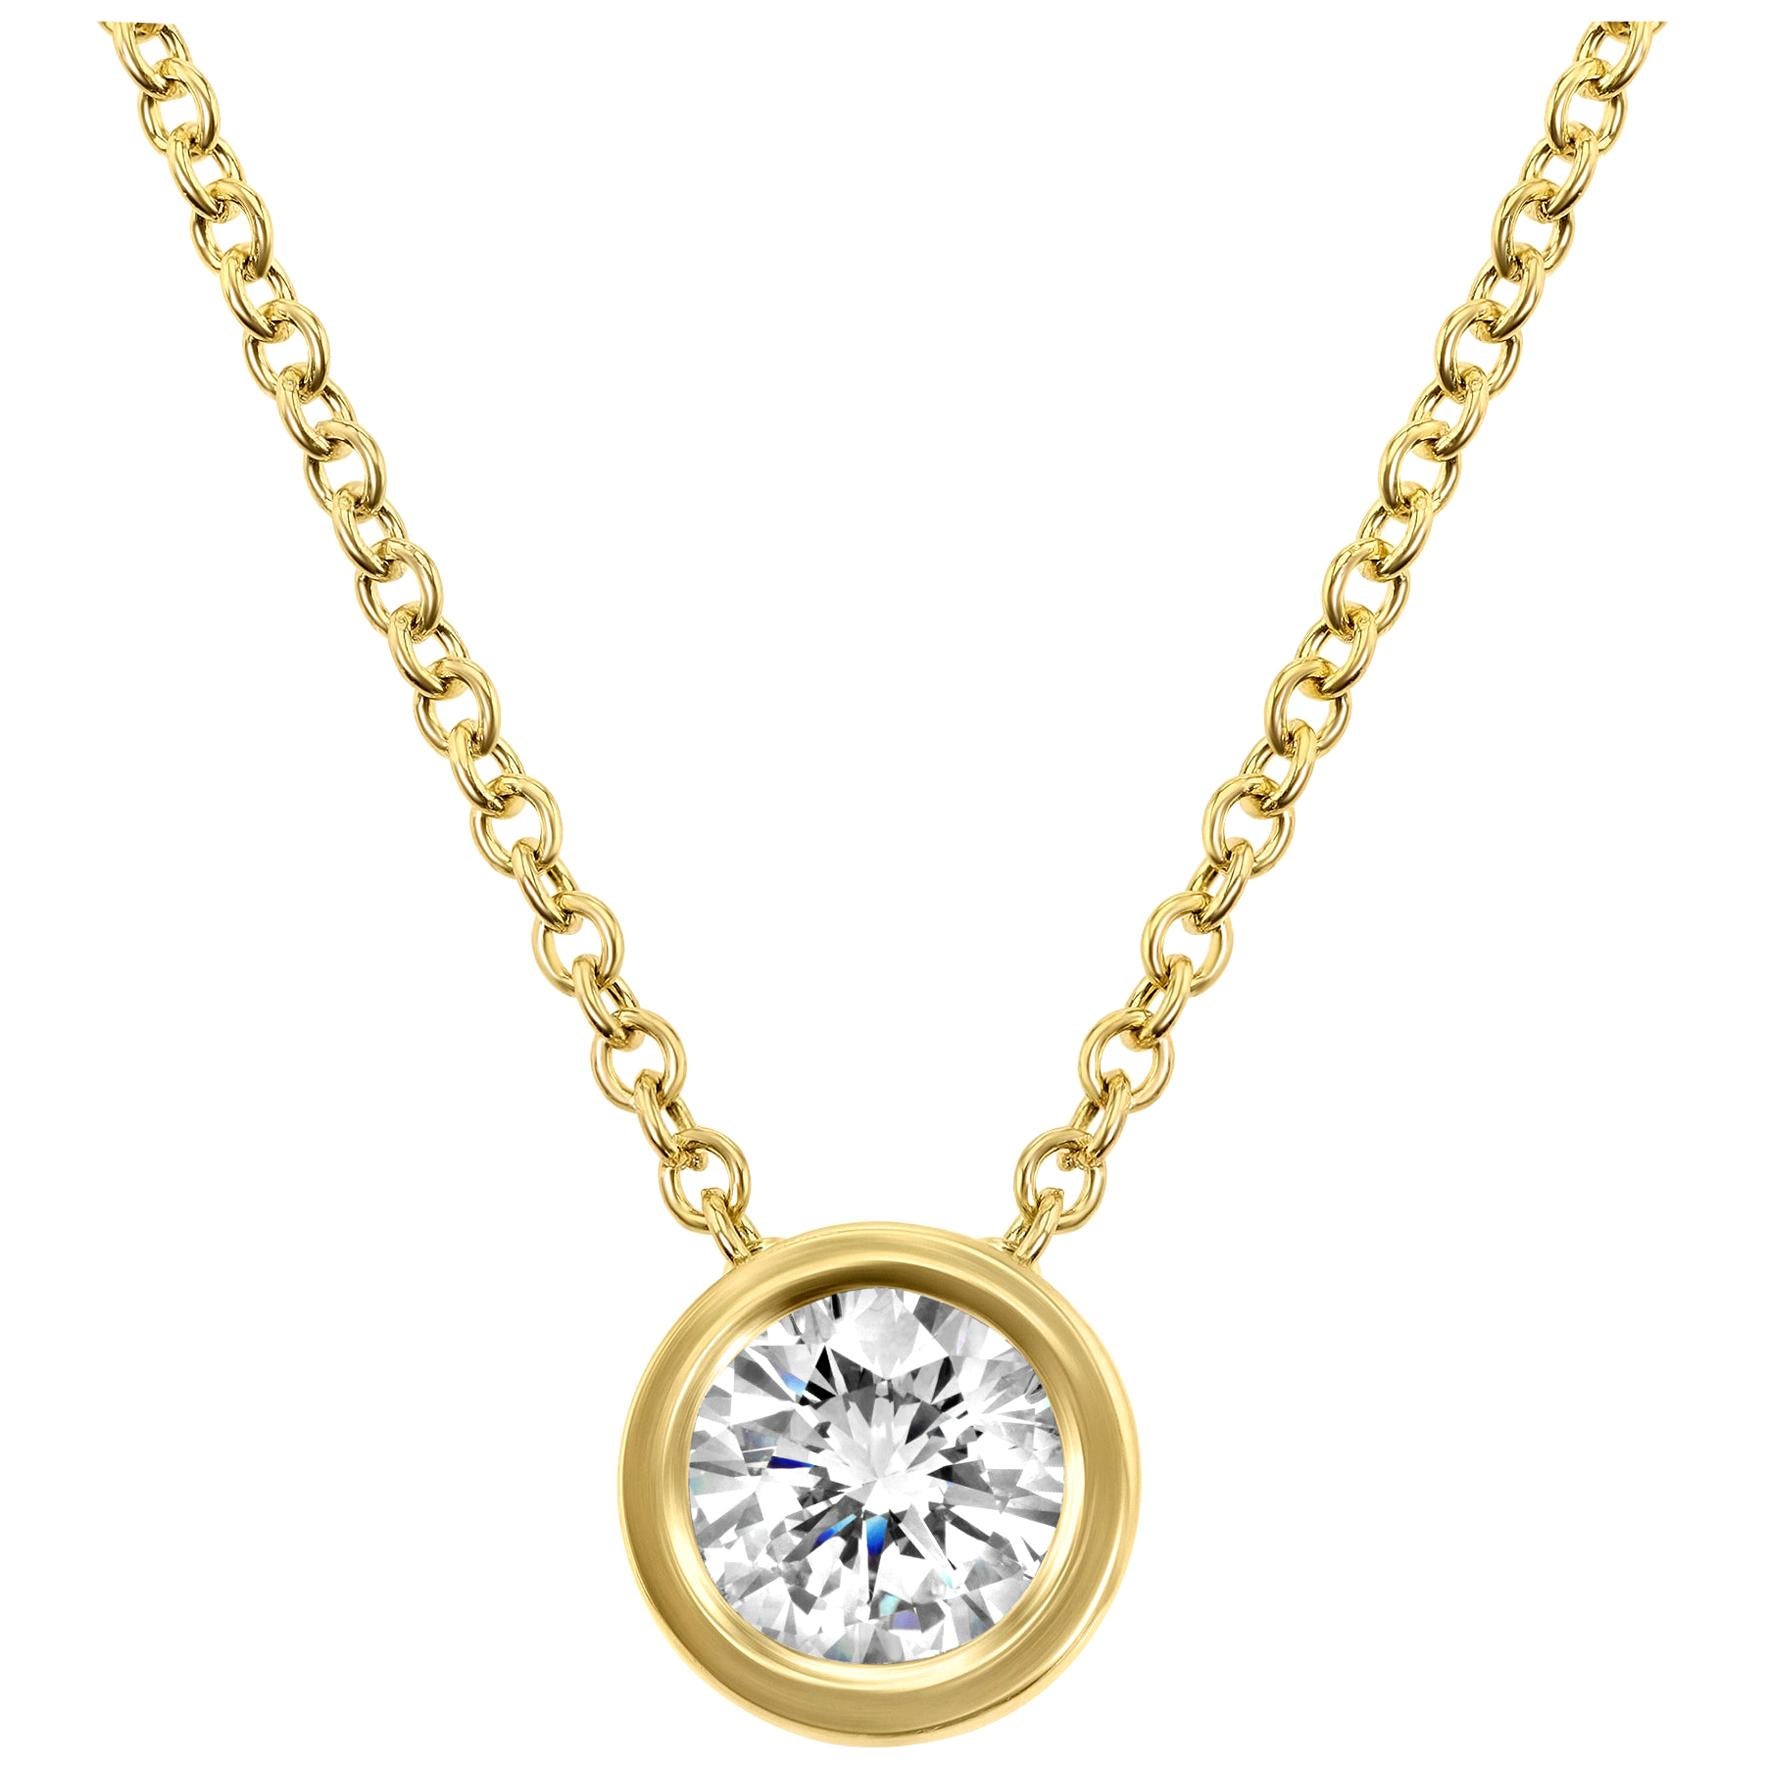 14 carat hallmark rose gold diamond necklace with earrings 💎💎💎🔥🔥 |  Instagram